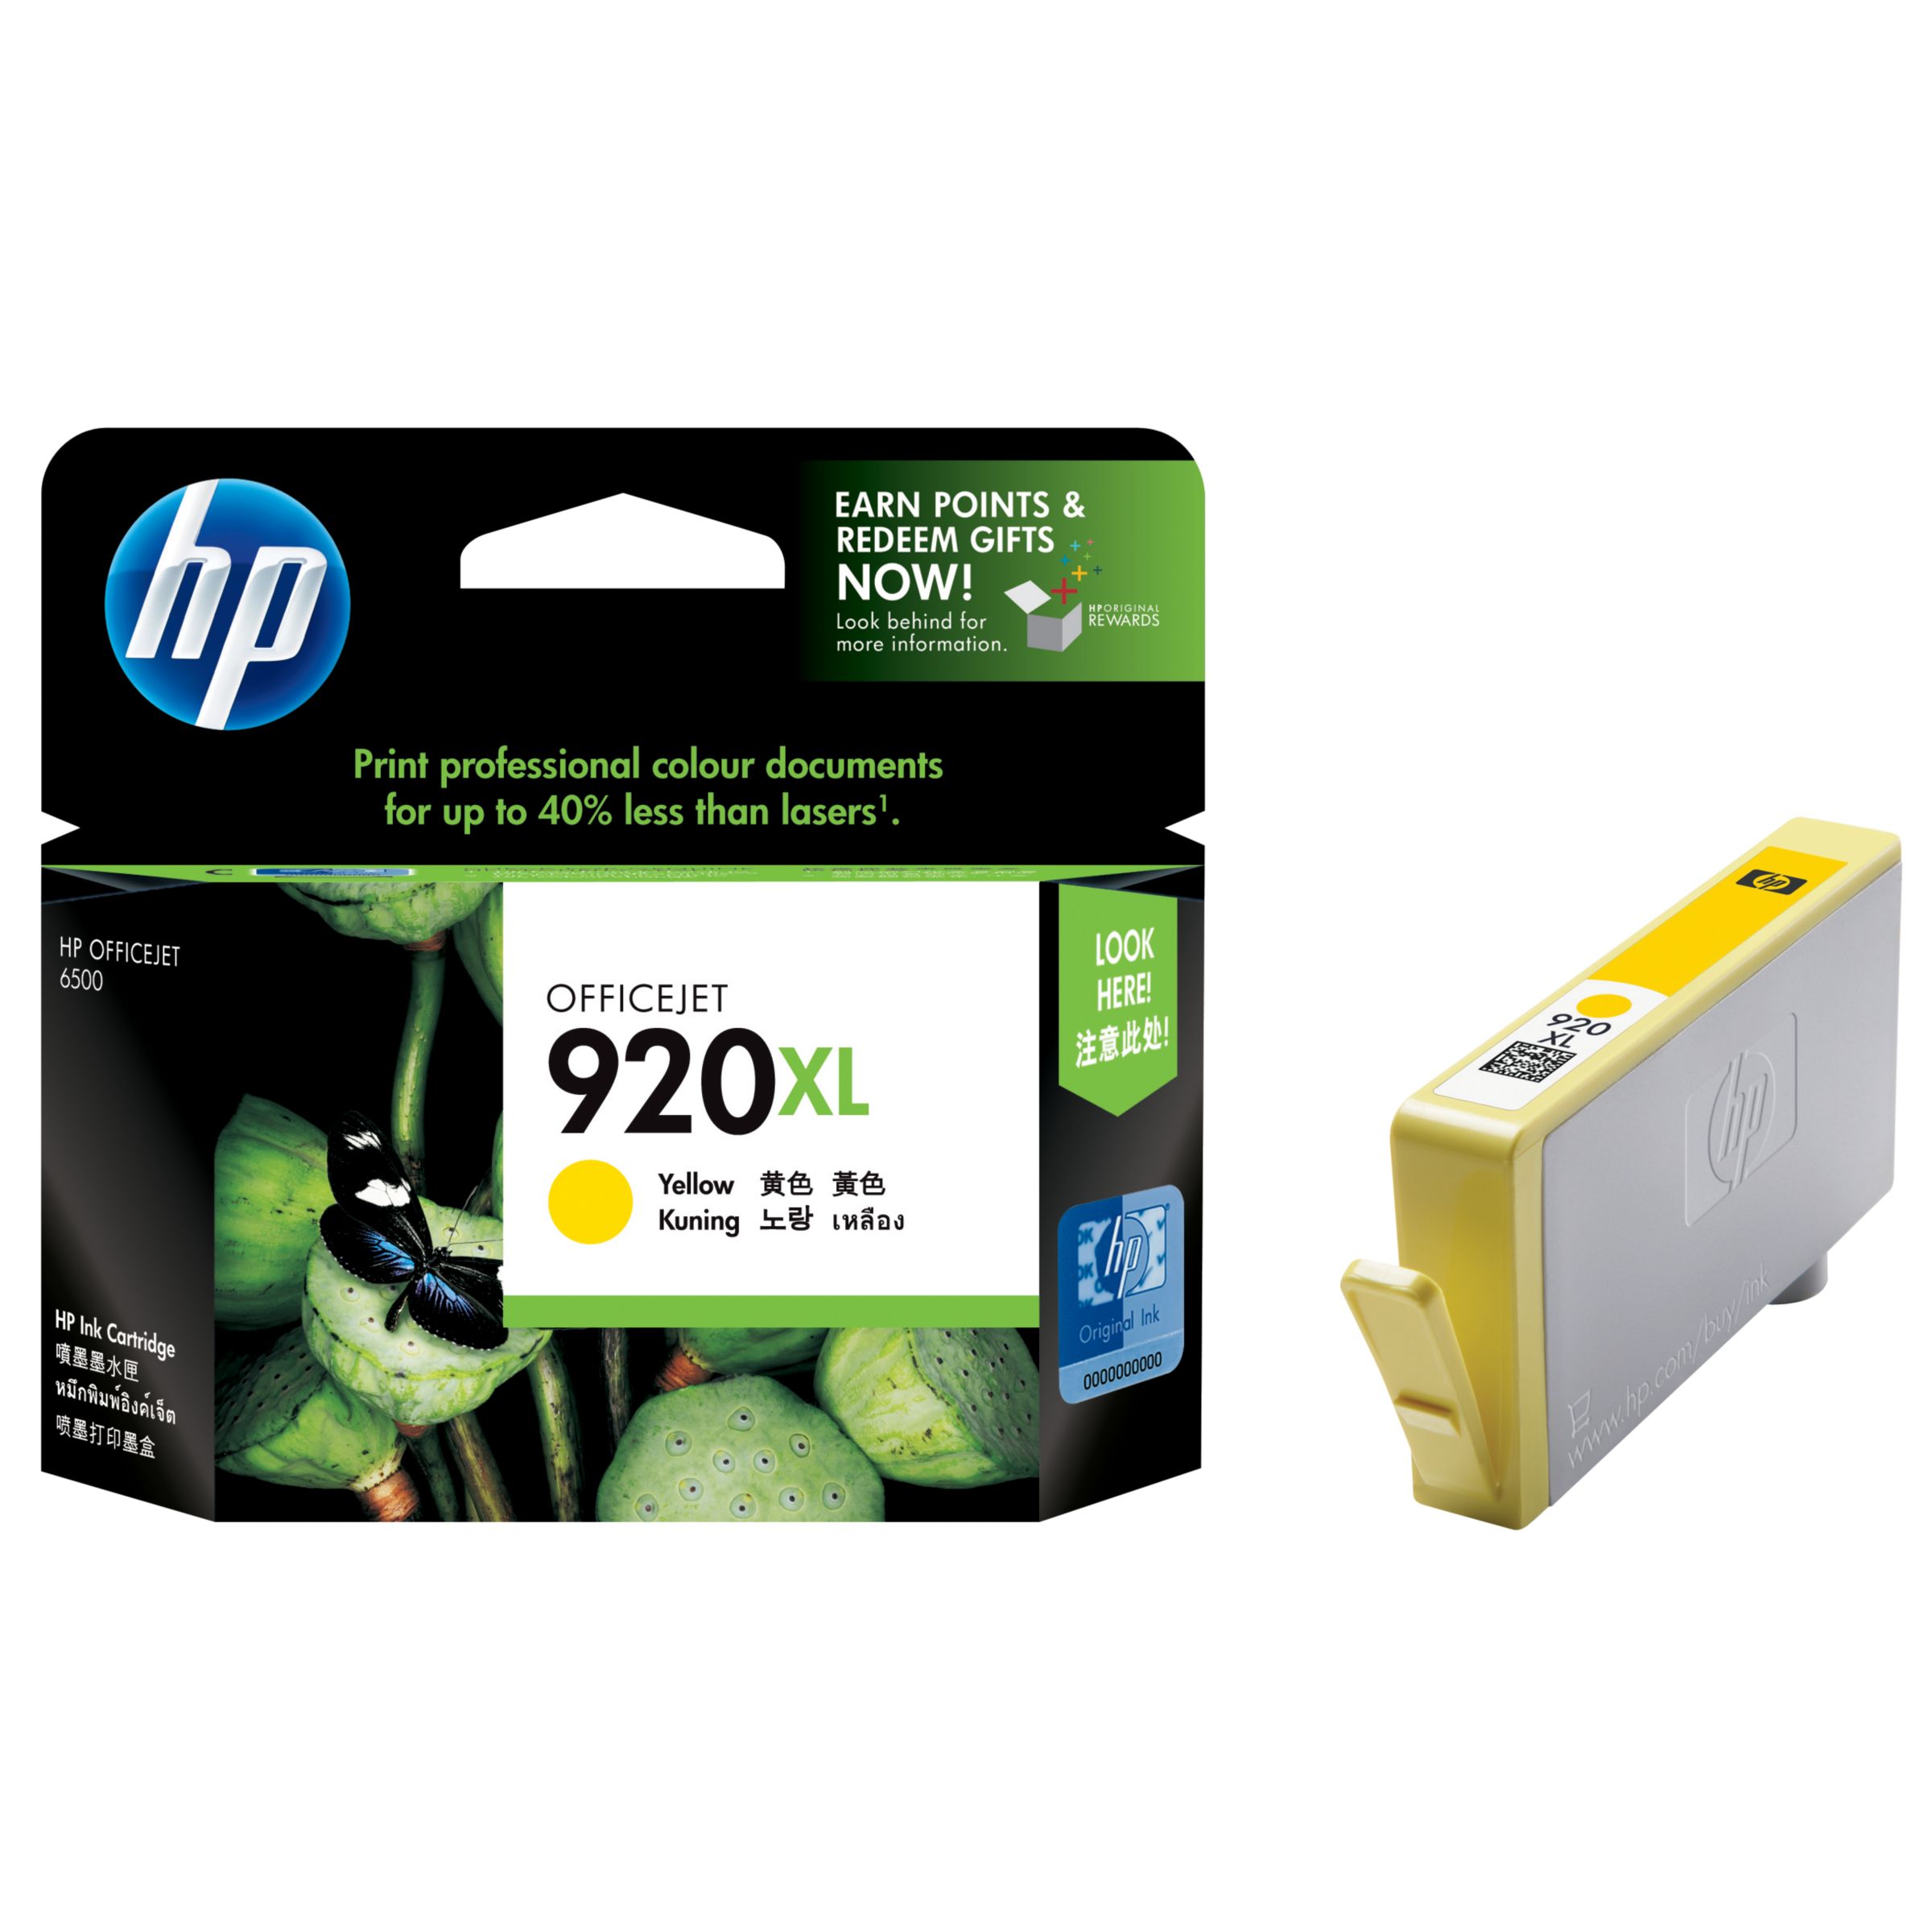 HP 920XL Officejet Printer Cartridge, Yellow,